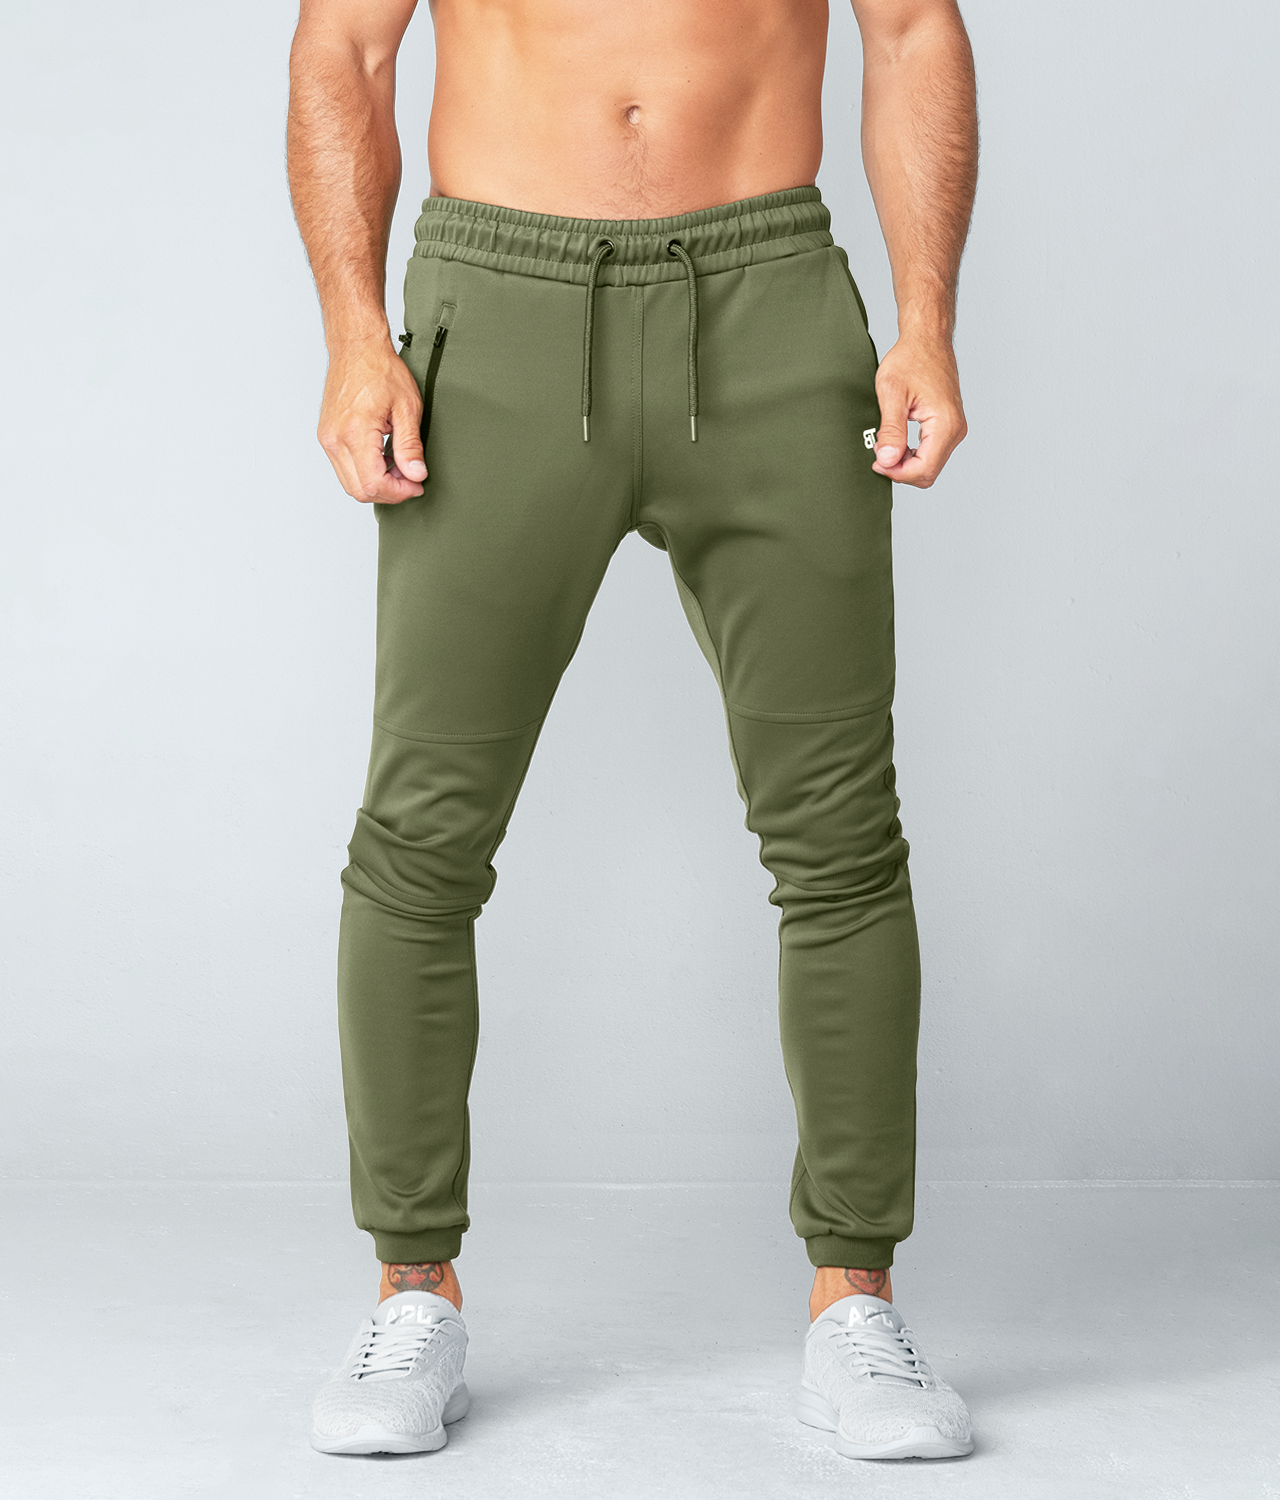 Organic Sweatpants Faded Grey | Colorful Standard